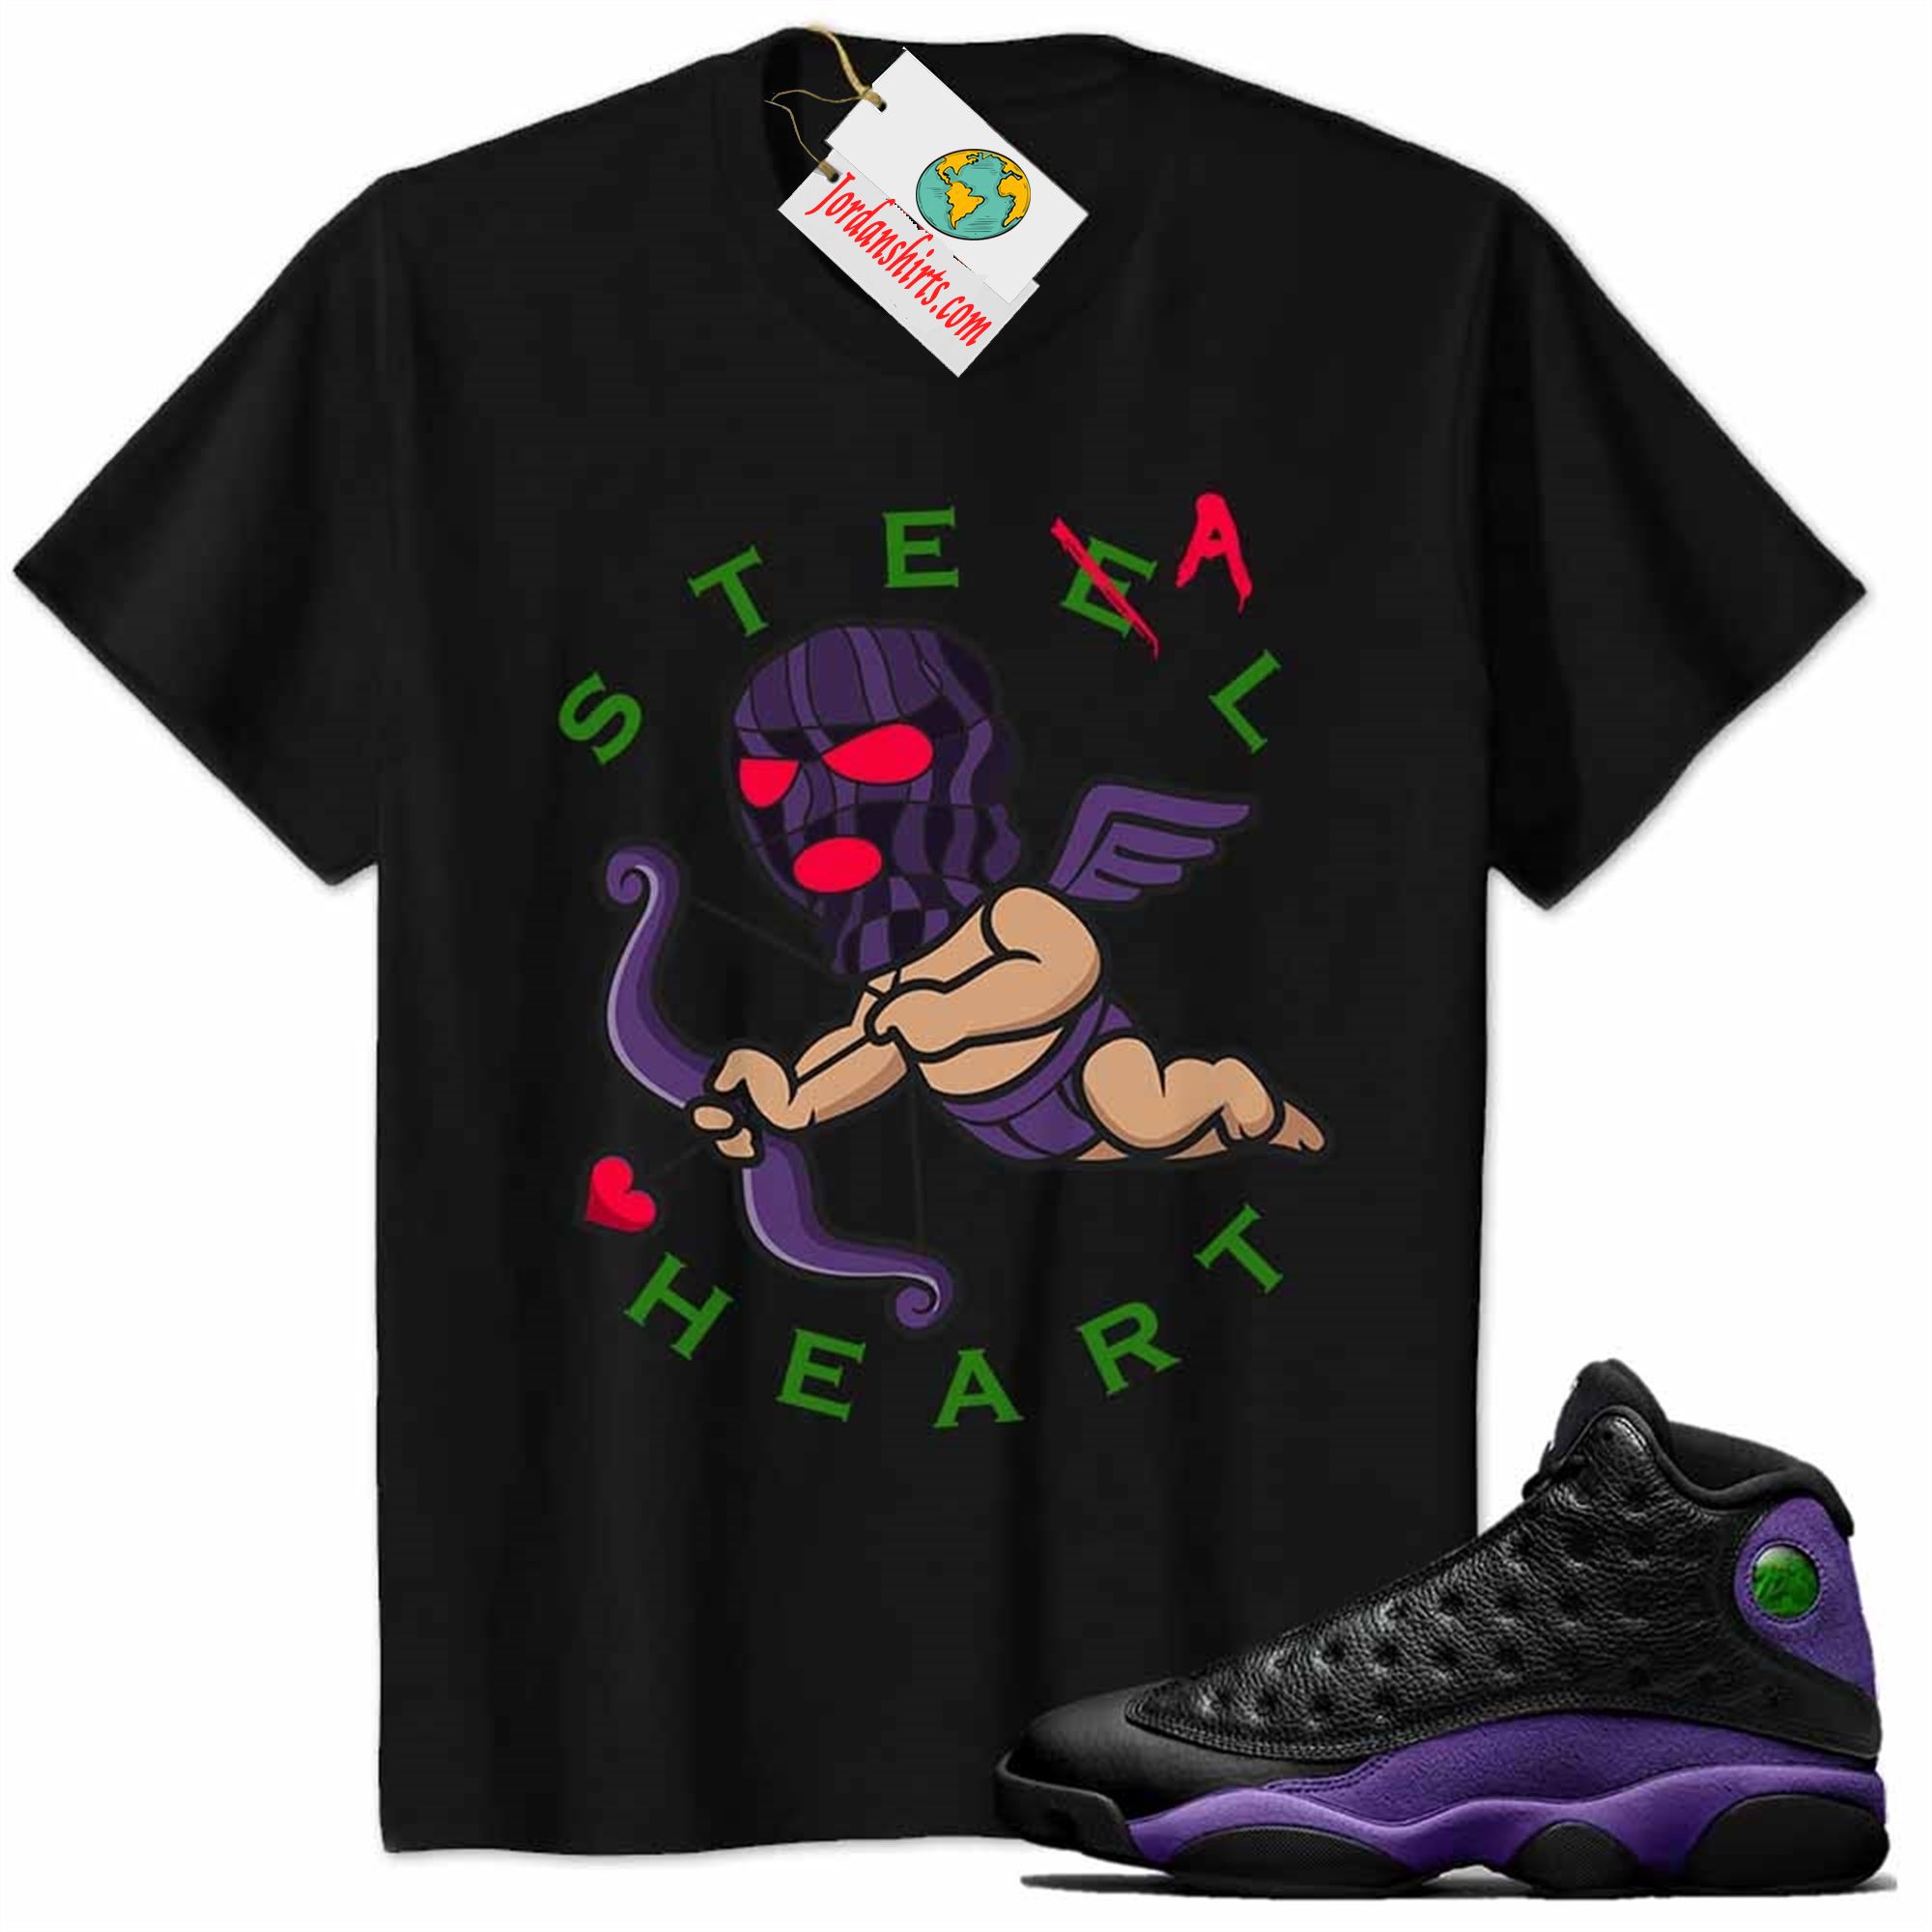 Jordan 13 Shirt, Steel Steal Heart Cupid Gangster Angel Ski Mask Black Air Jordan 13 Court Purple 13s Full Size Up To 5xl